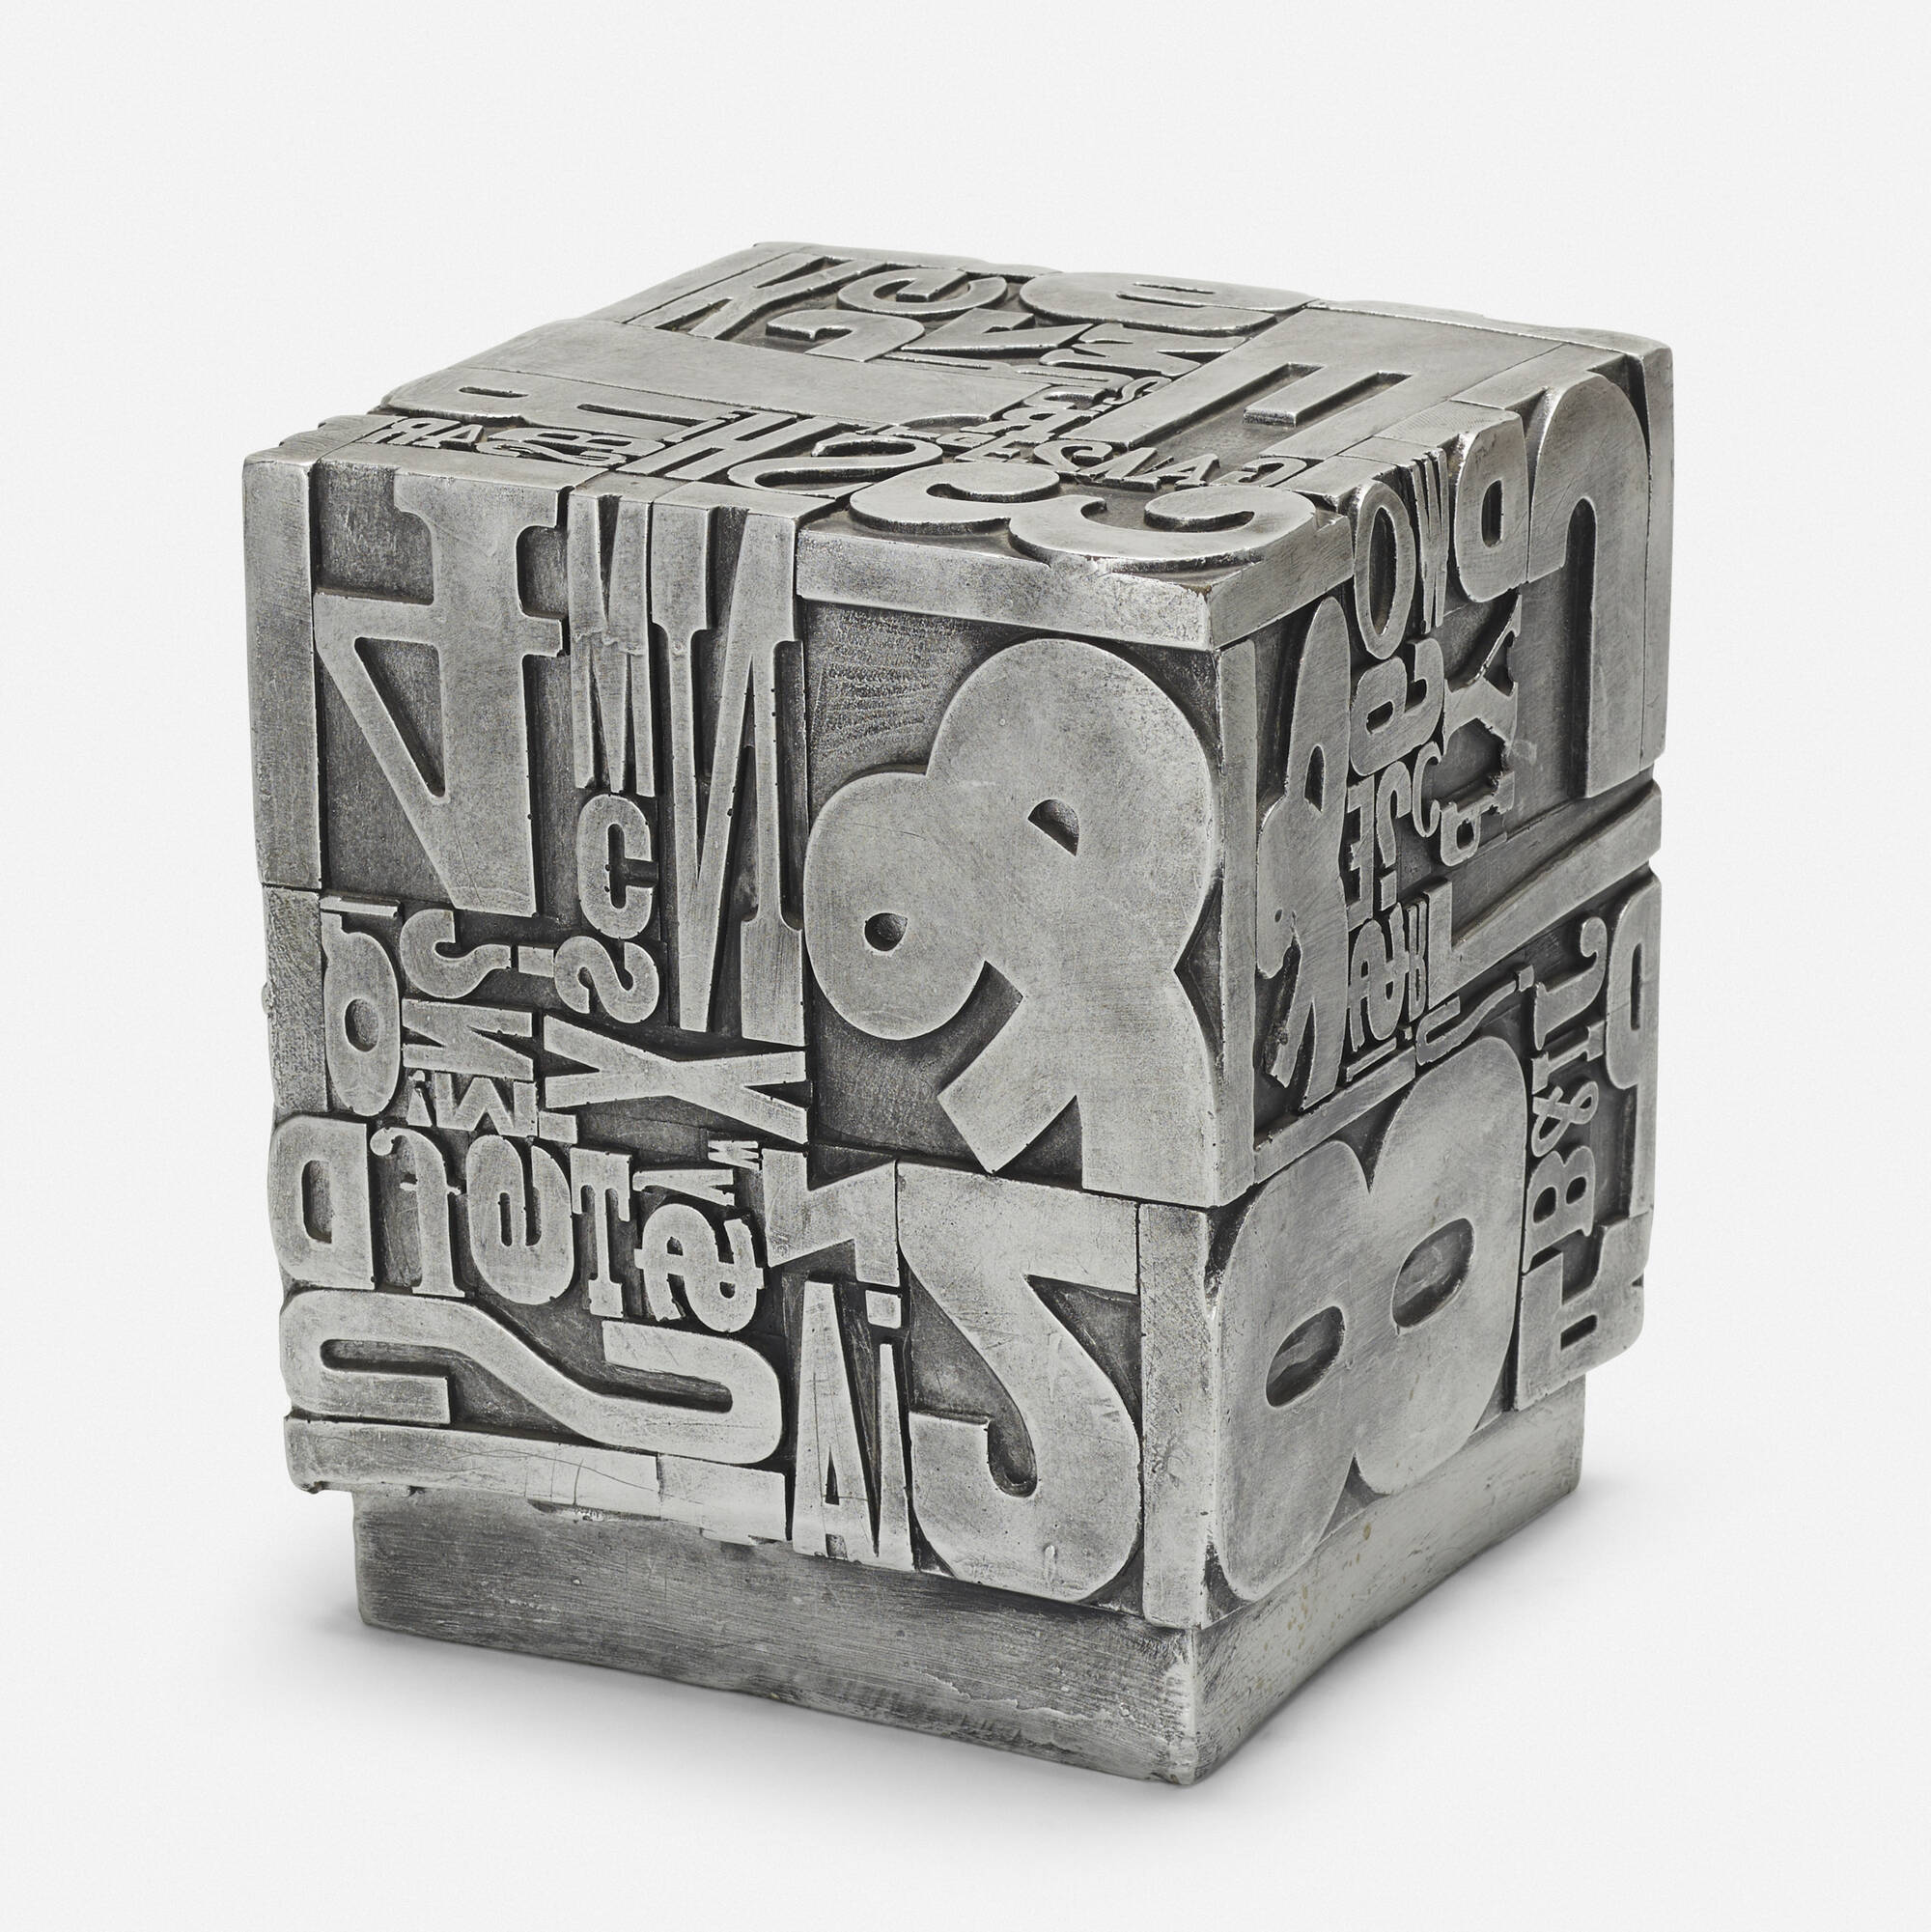 548: SHELDON ROSE, Alphasculpt Cube stool < Art + Design, 18 July